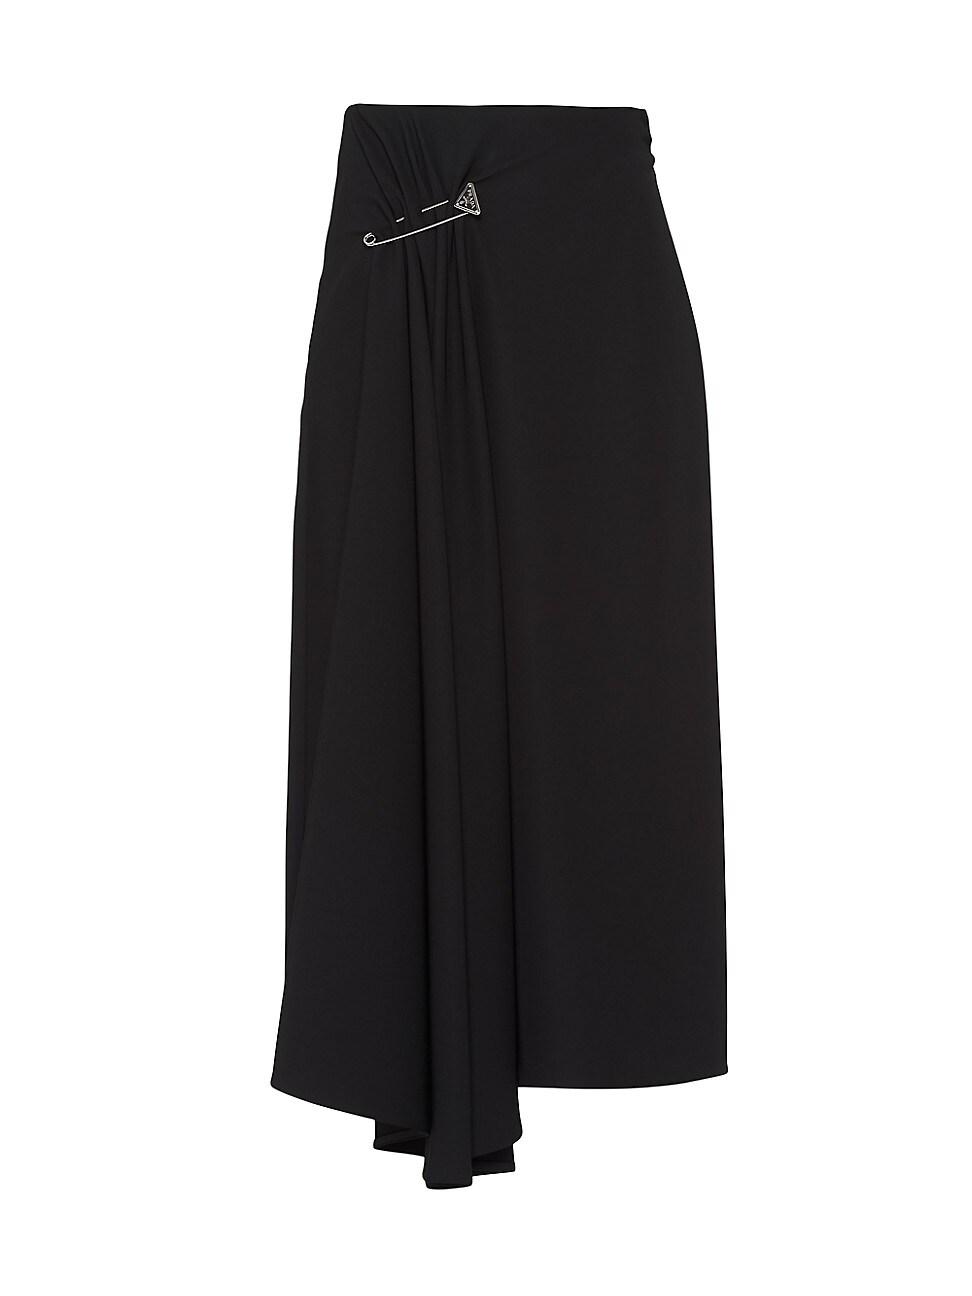 Prada Cady Midi-skirt in Black | Lyst